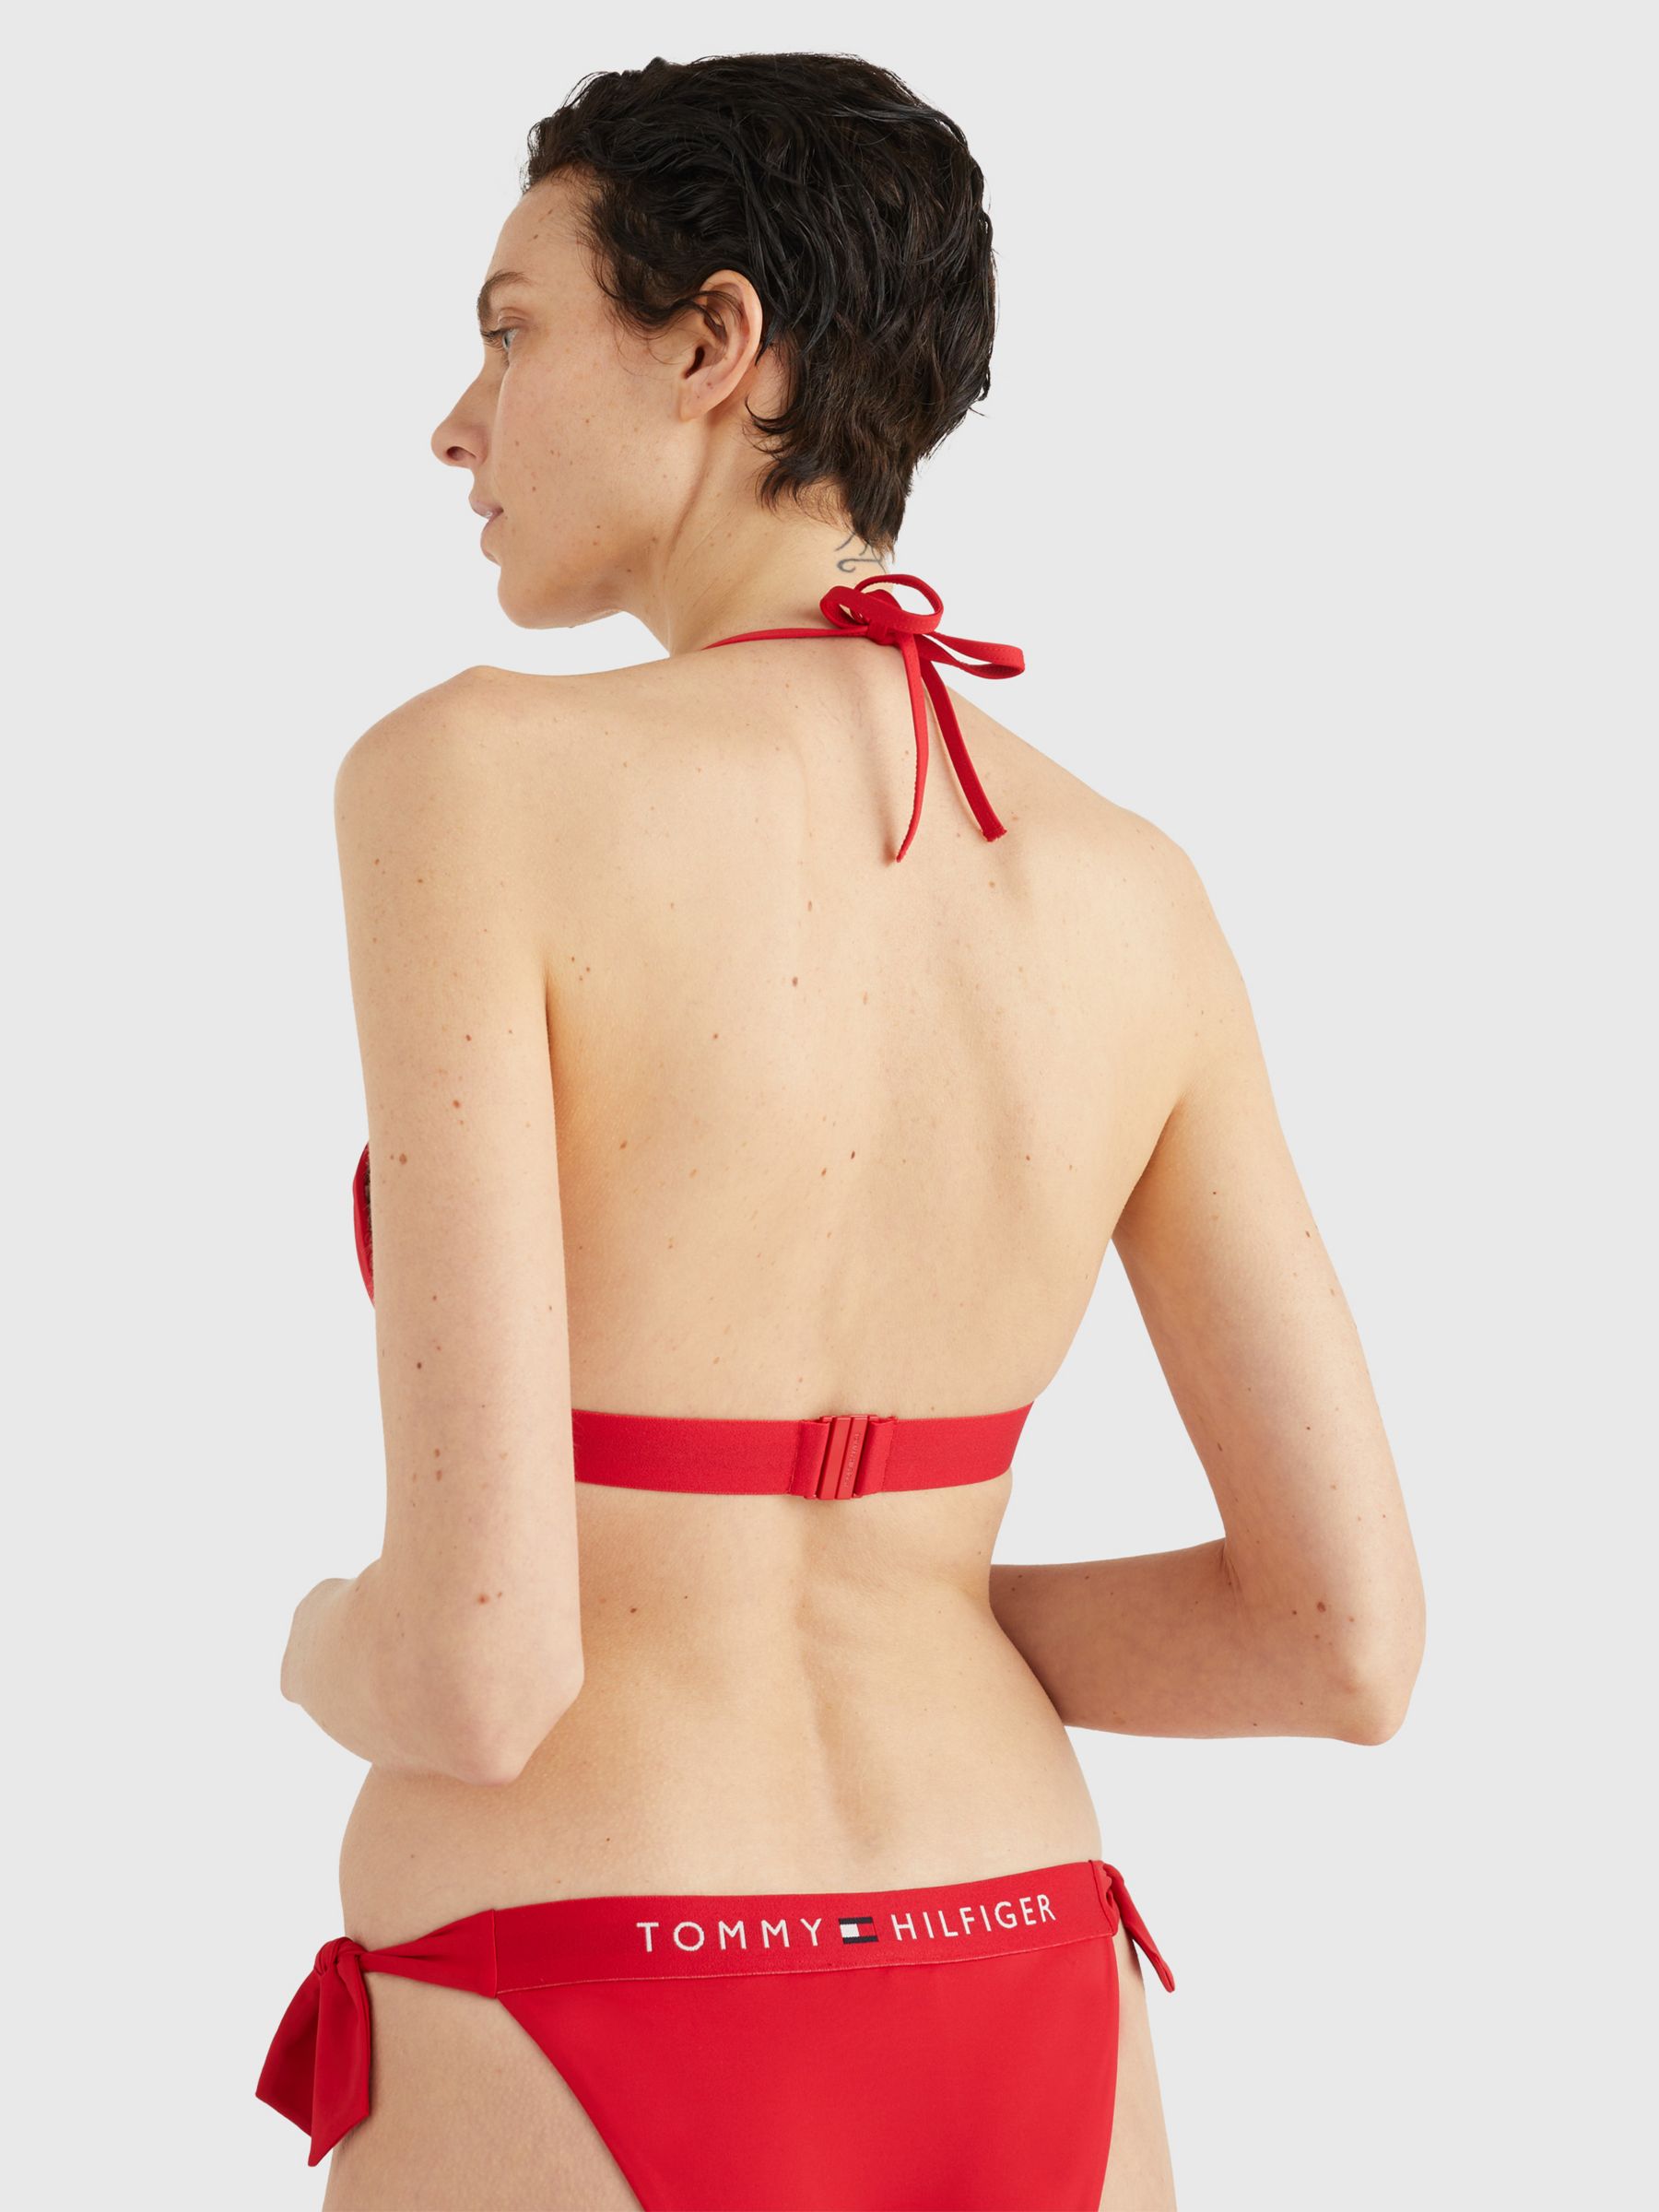 Tommy Hilfiger Fixed Foam Triangle Bikini Top, Primary Red, XS